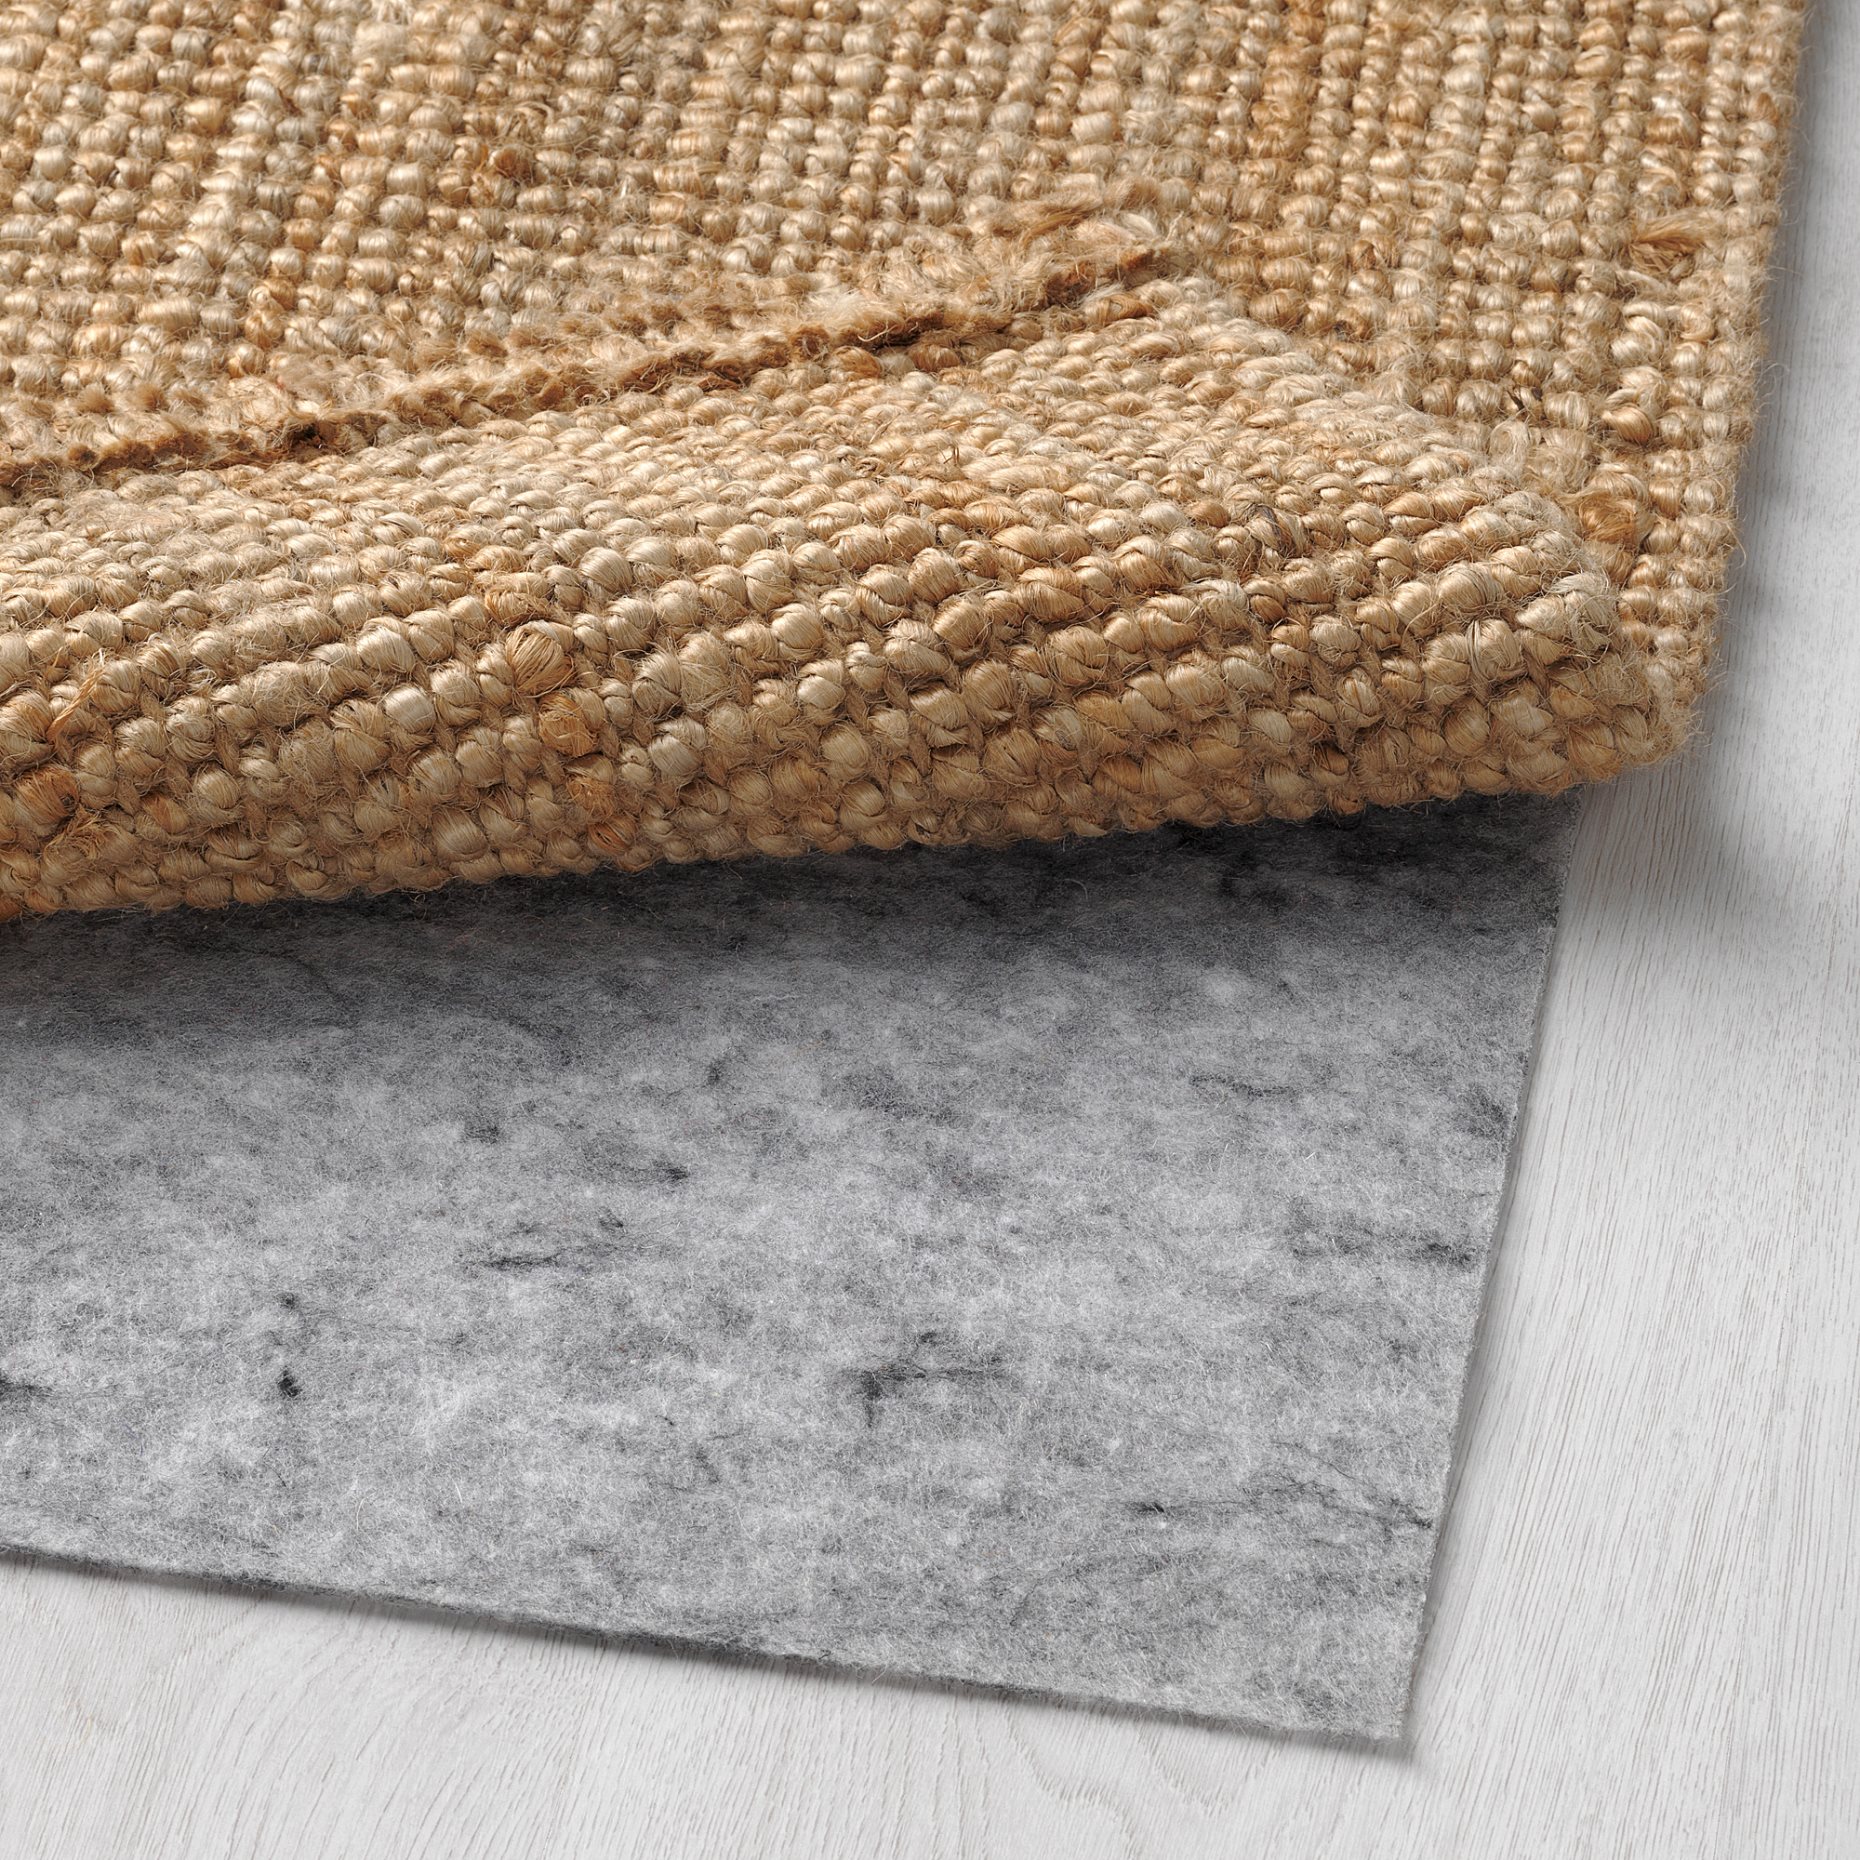 LOHALS, килим, гладко тъкан, 80x150см, 203.074.81